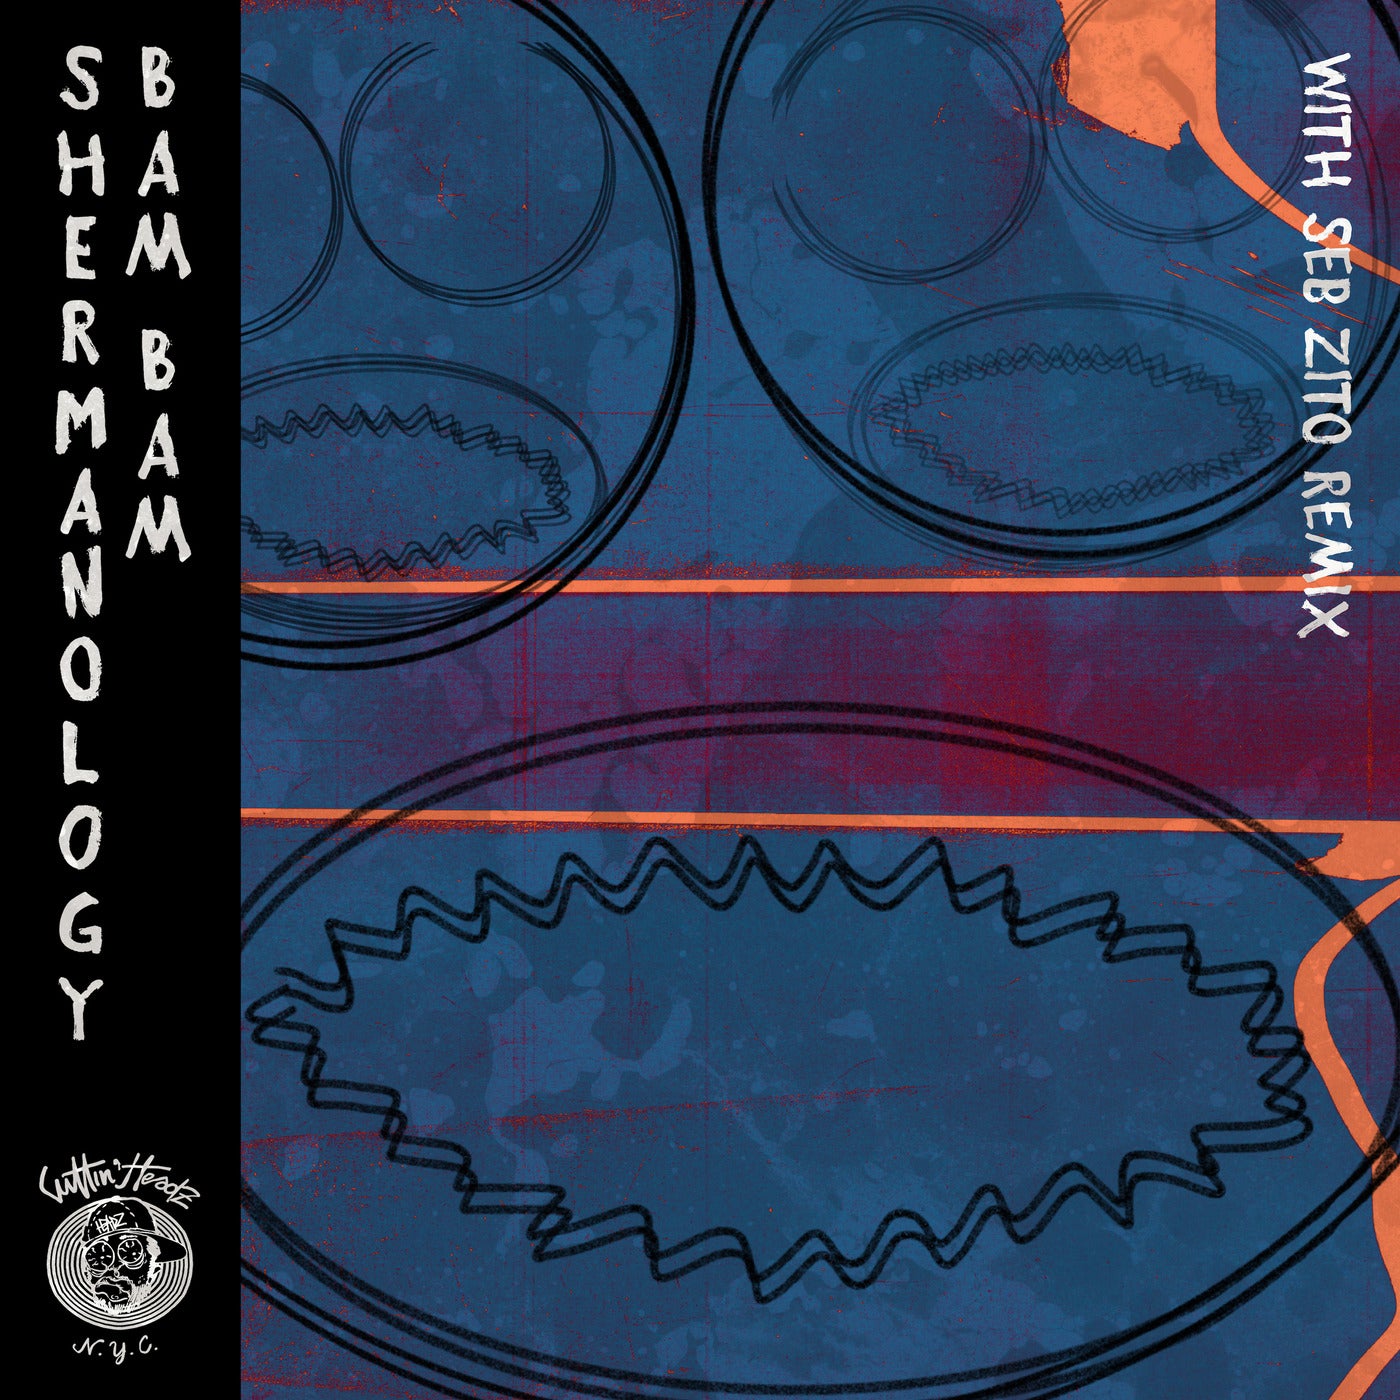 image cover: Shermanology - BAM BAM / CH033